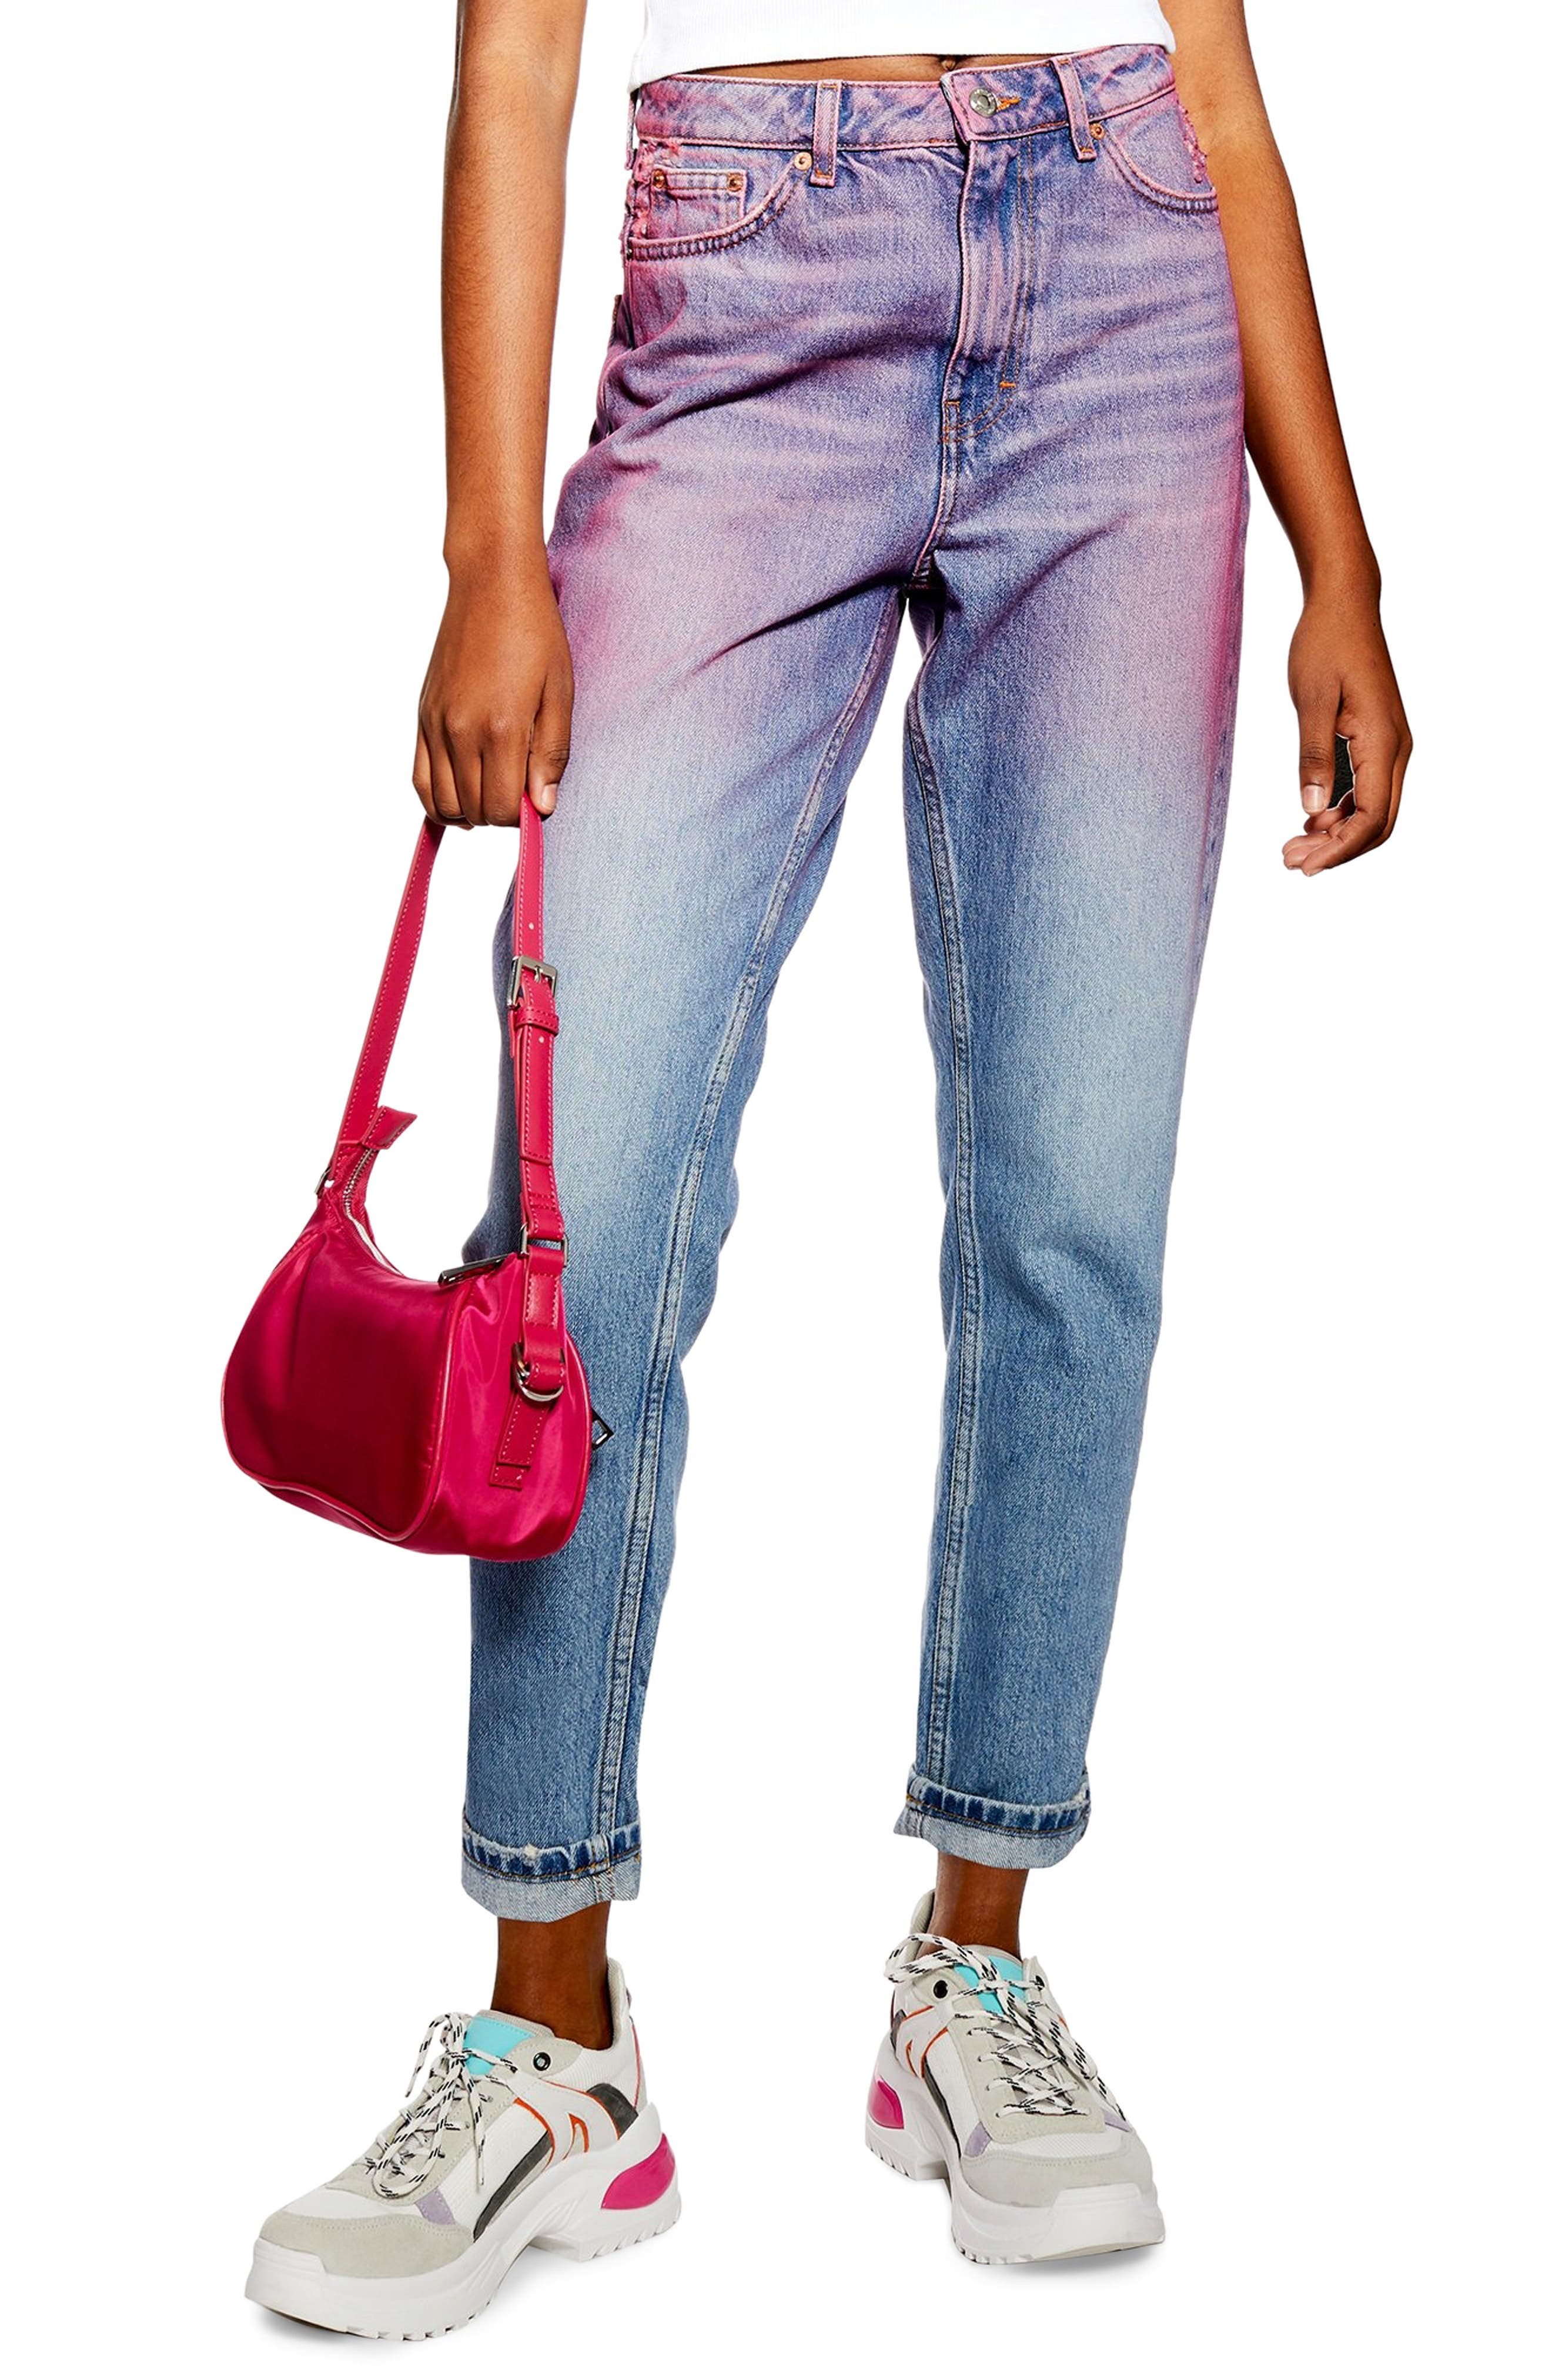 topshop pink jeans